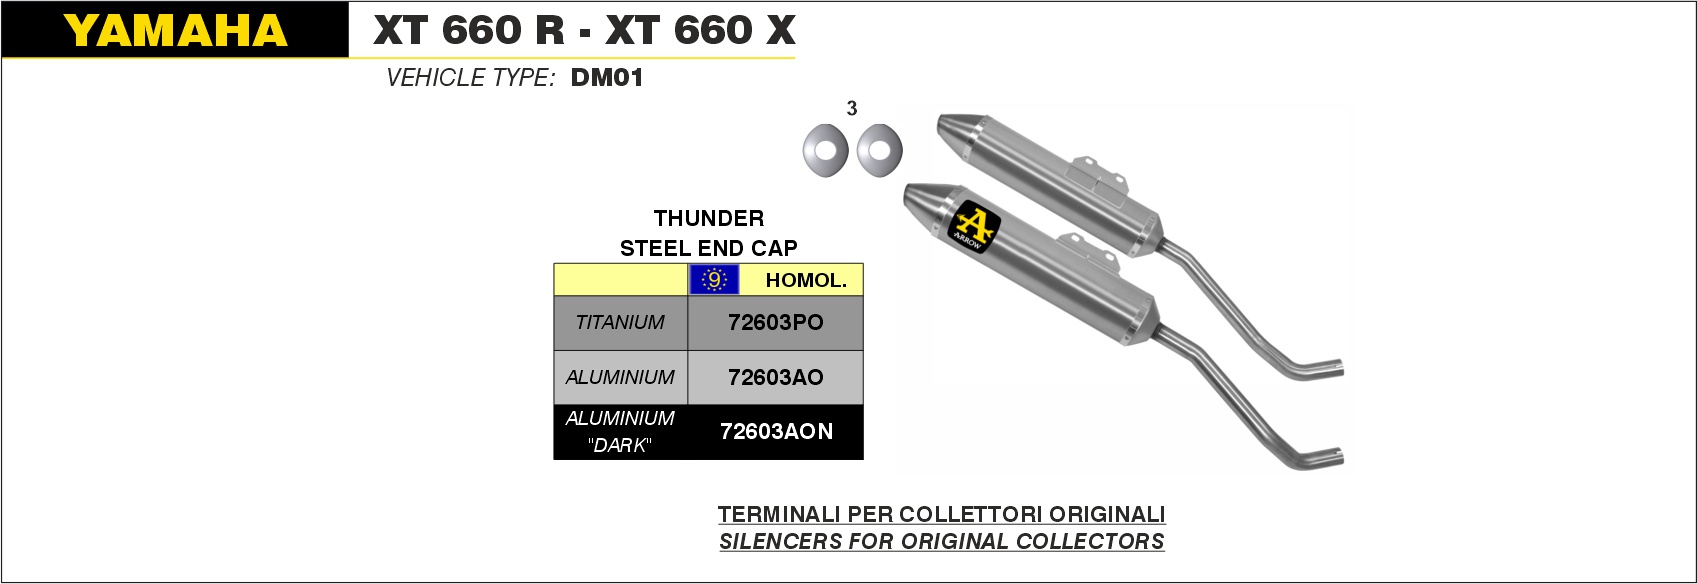  Yamaha XT 660 R - XT 660 X, Bj. 2004-2016 